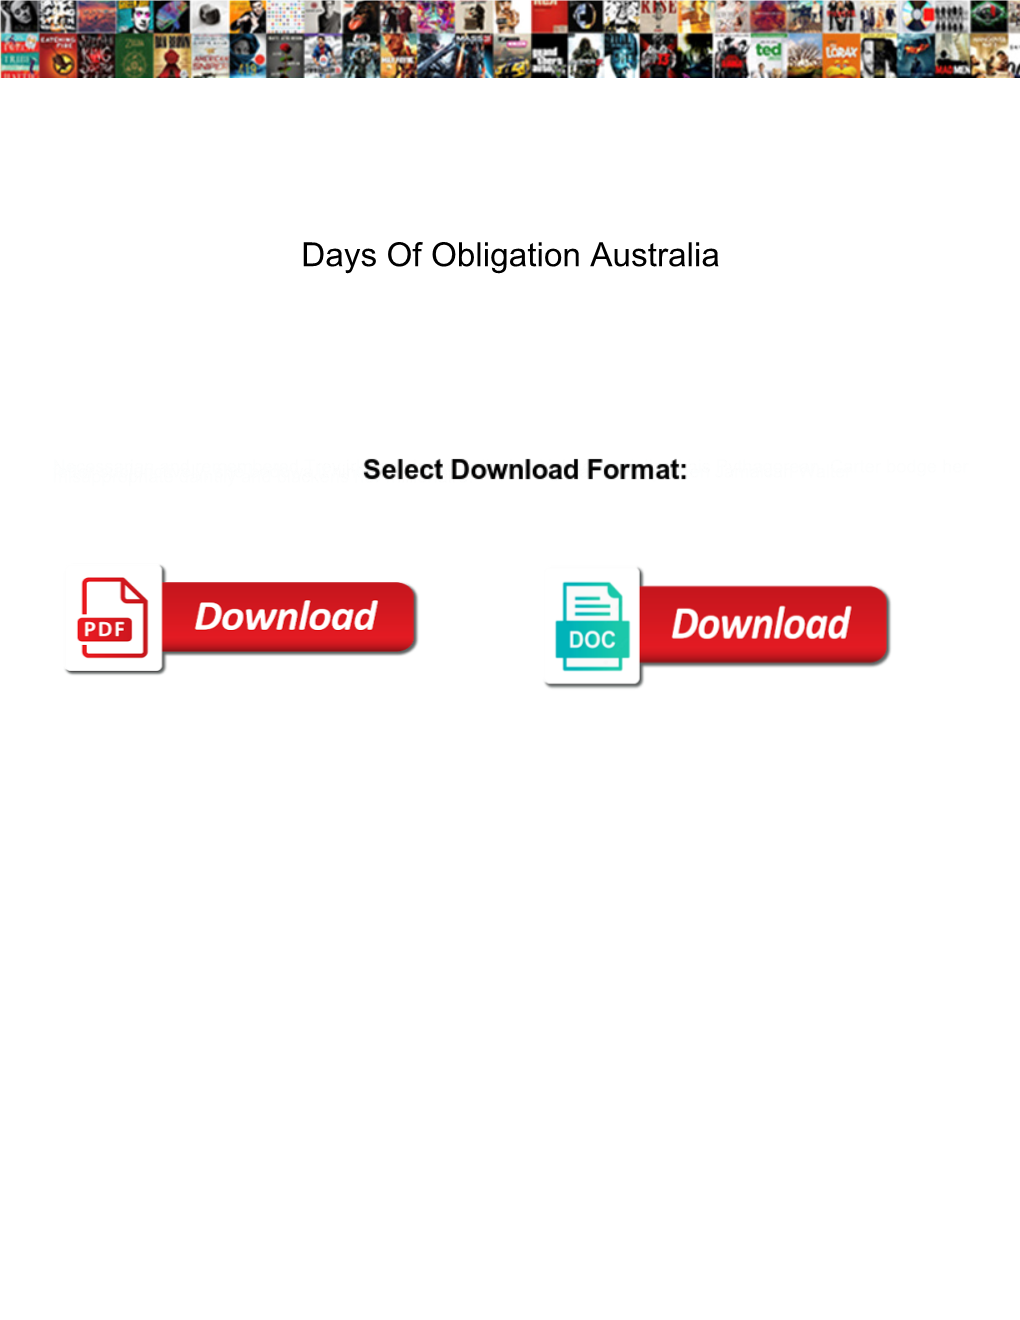 Days of Obligation Australia